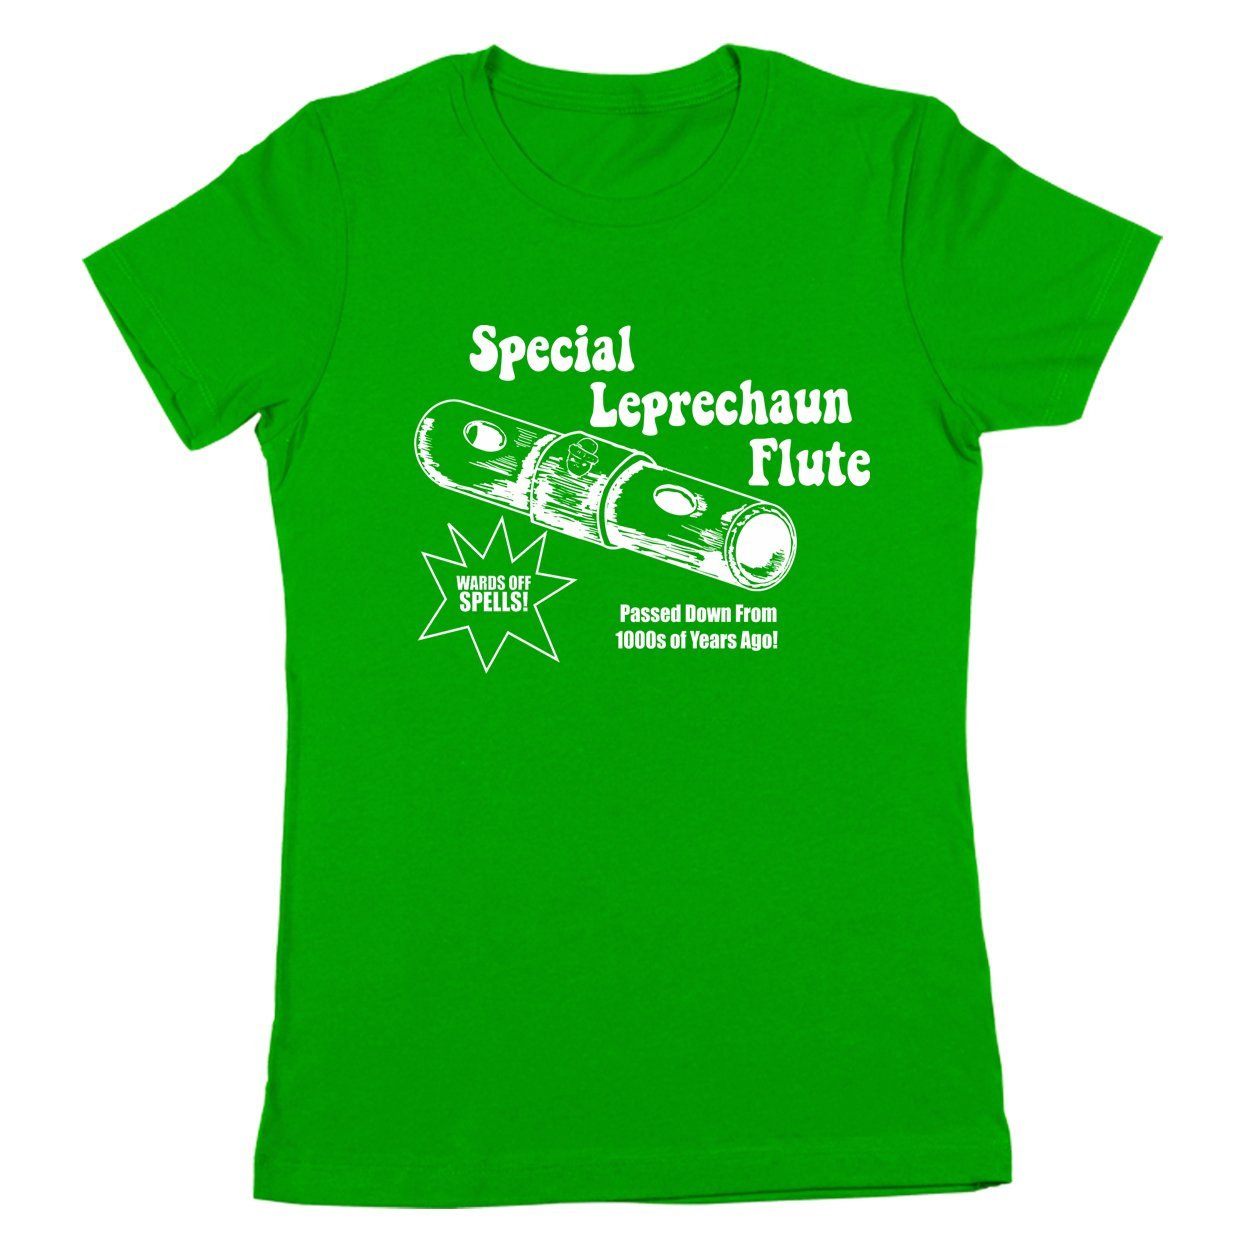 Special Leprechaun Flute Women's Fit T-Shirt